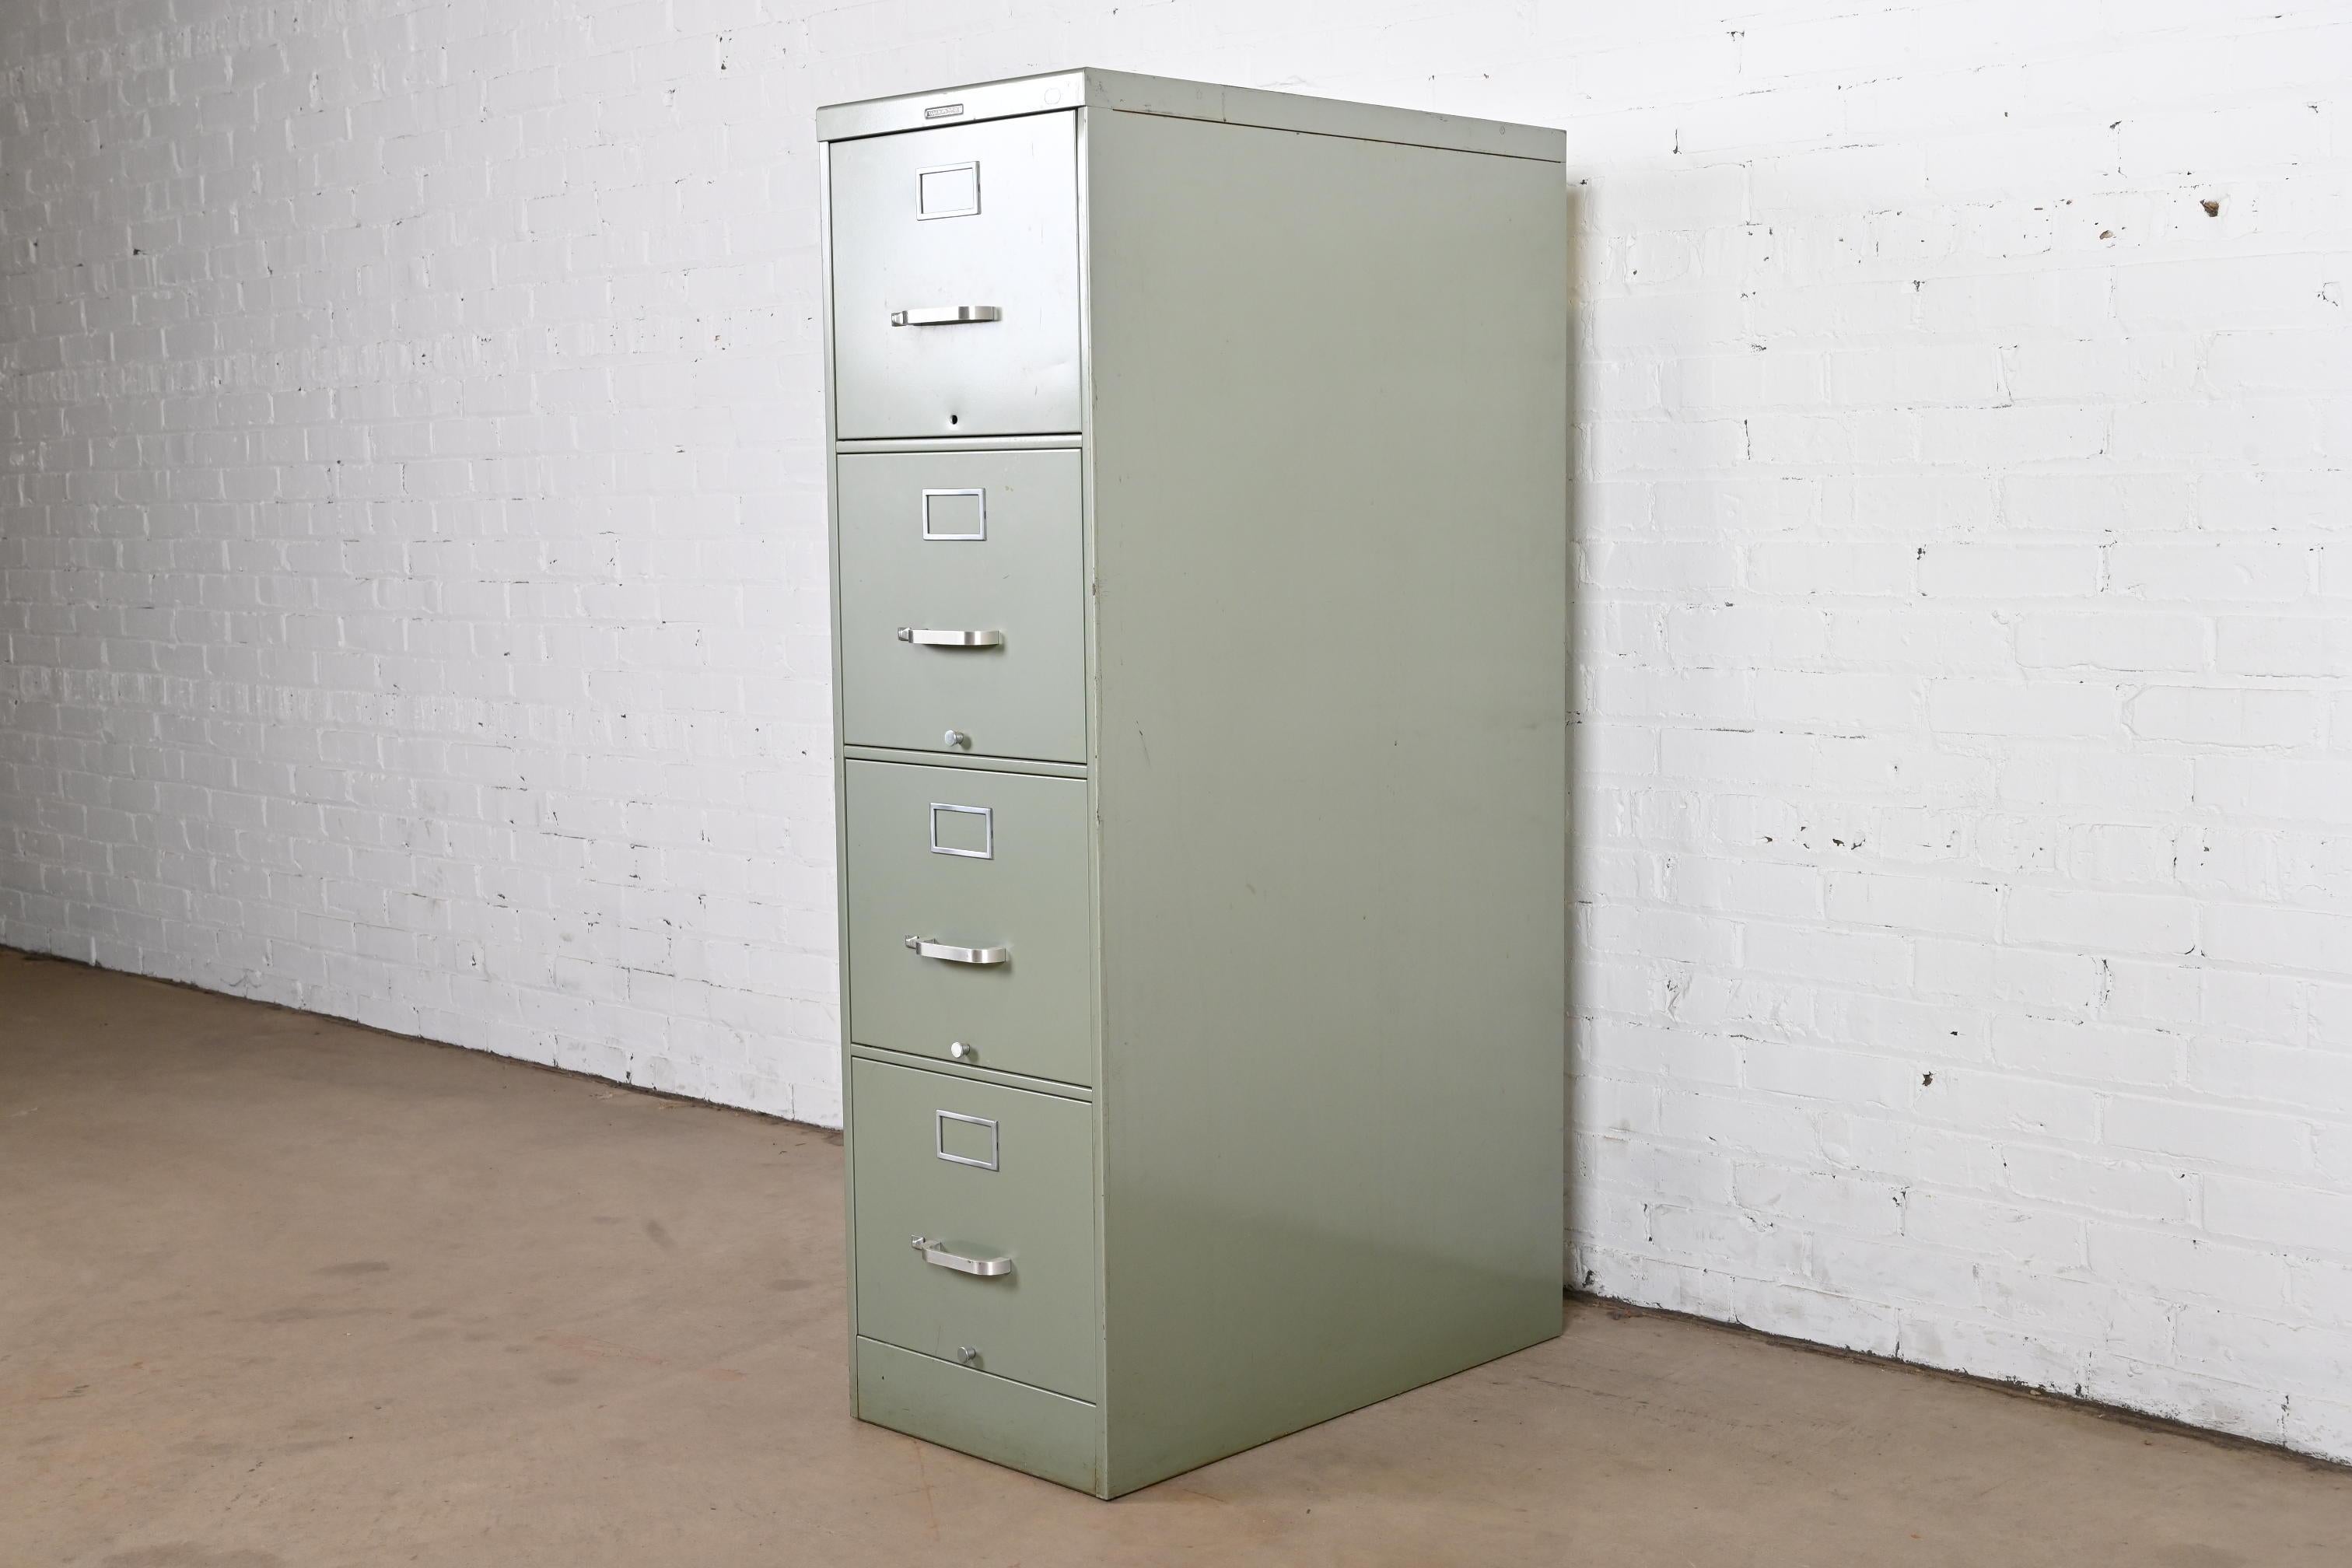 Mid-20th Century Vintage Steelcase Industrial Metal File Cabinet, circa 1950s